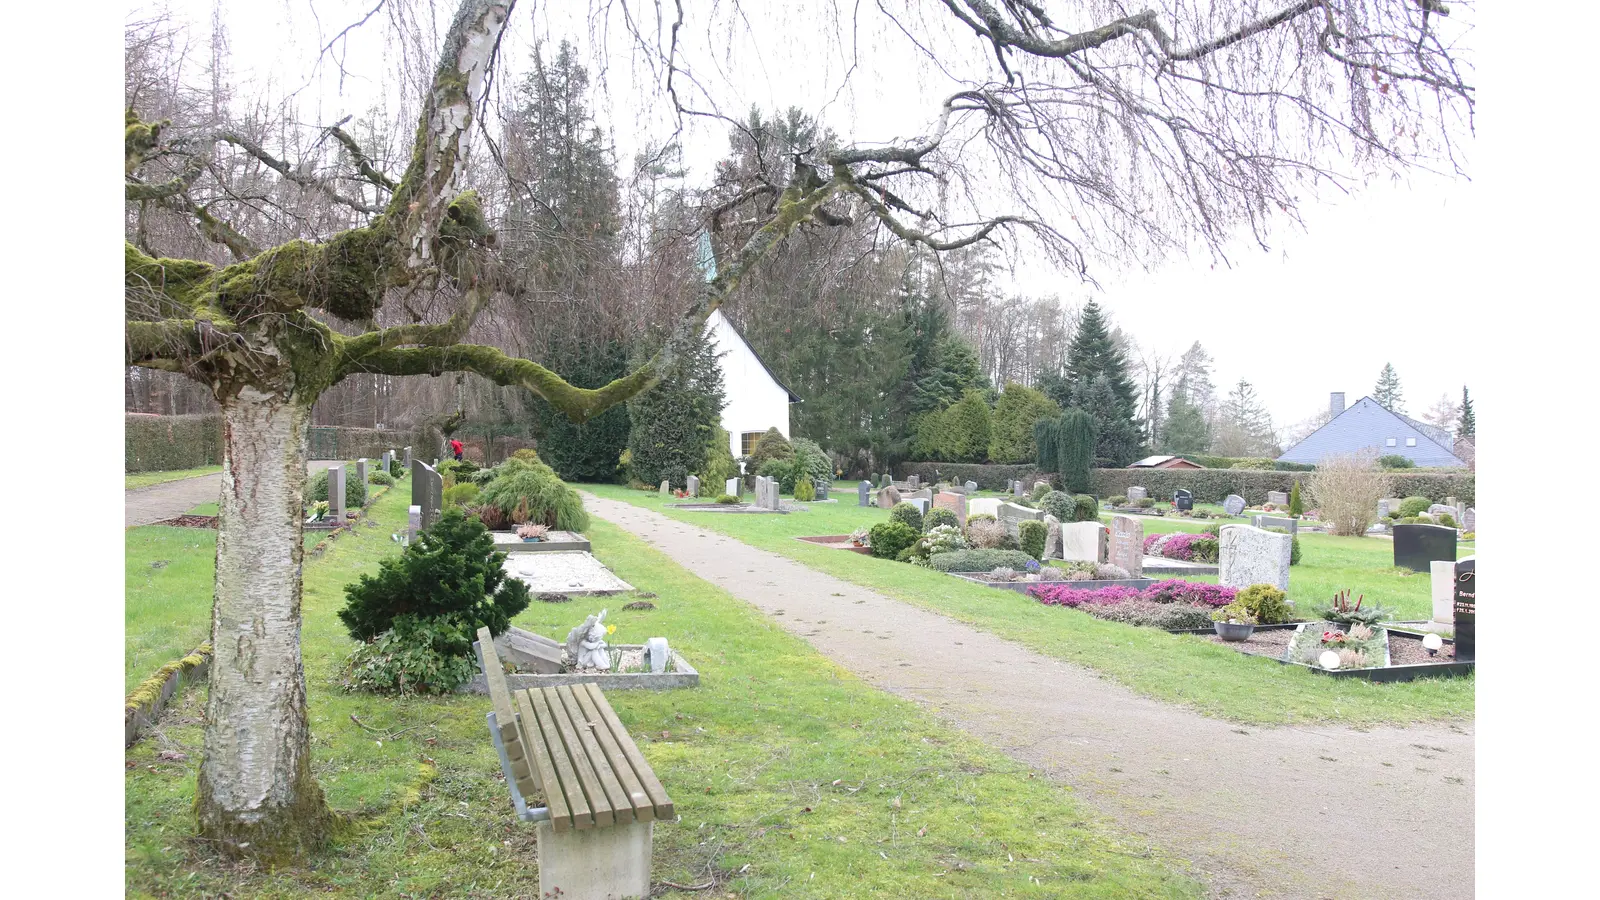 Der Friedhof in Obernwöhren soll einen stärker parkartigen Charakter erhalten. (Foto: Borchers, Bastian)